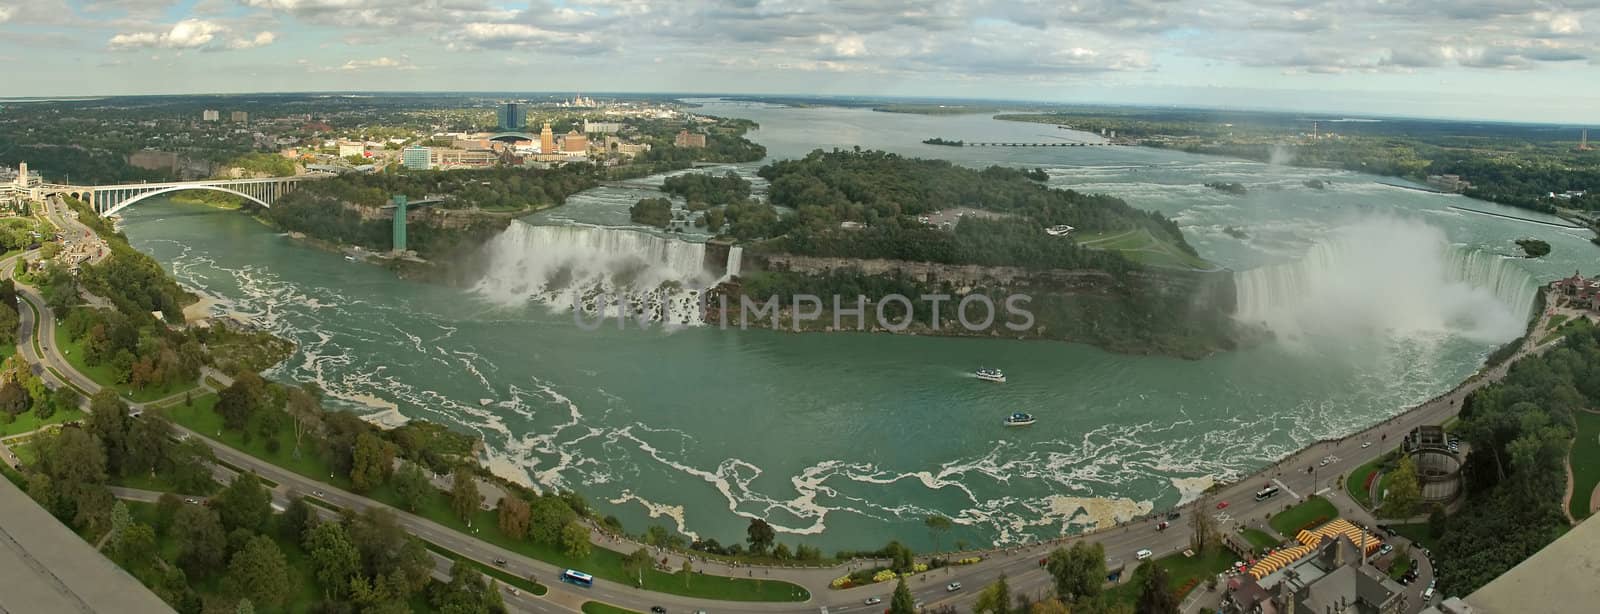 Niagara falls by rorem